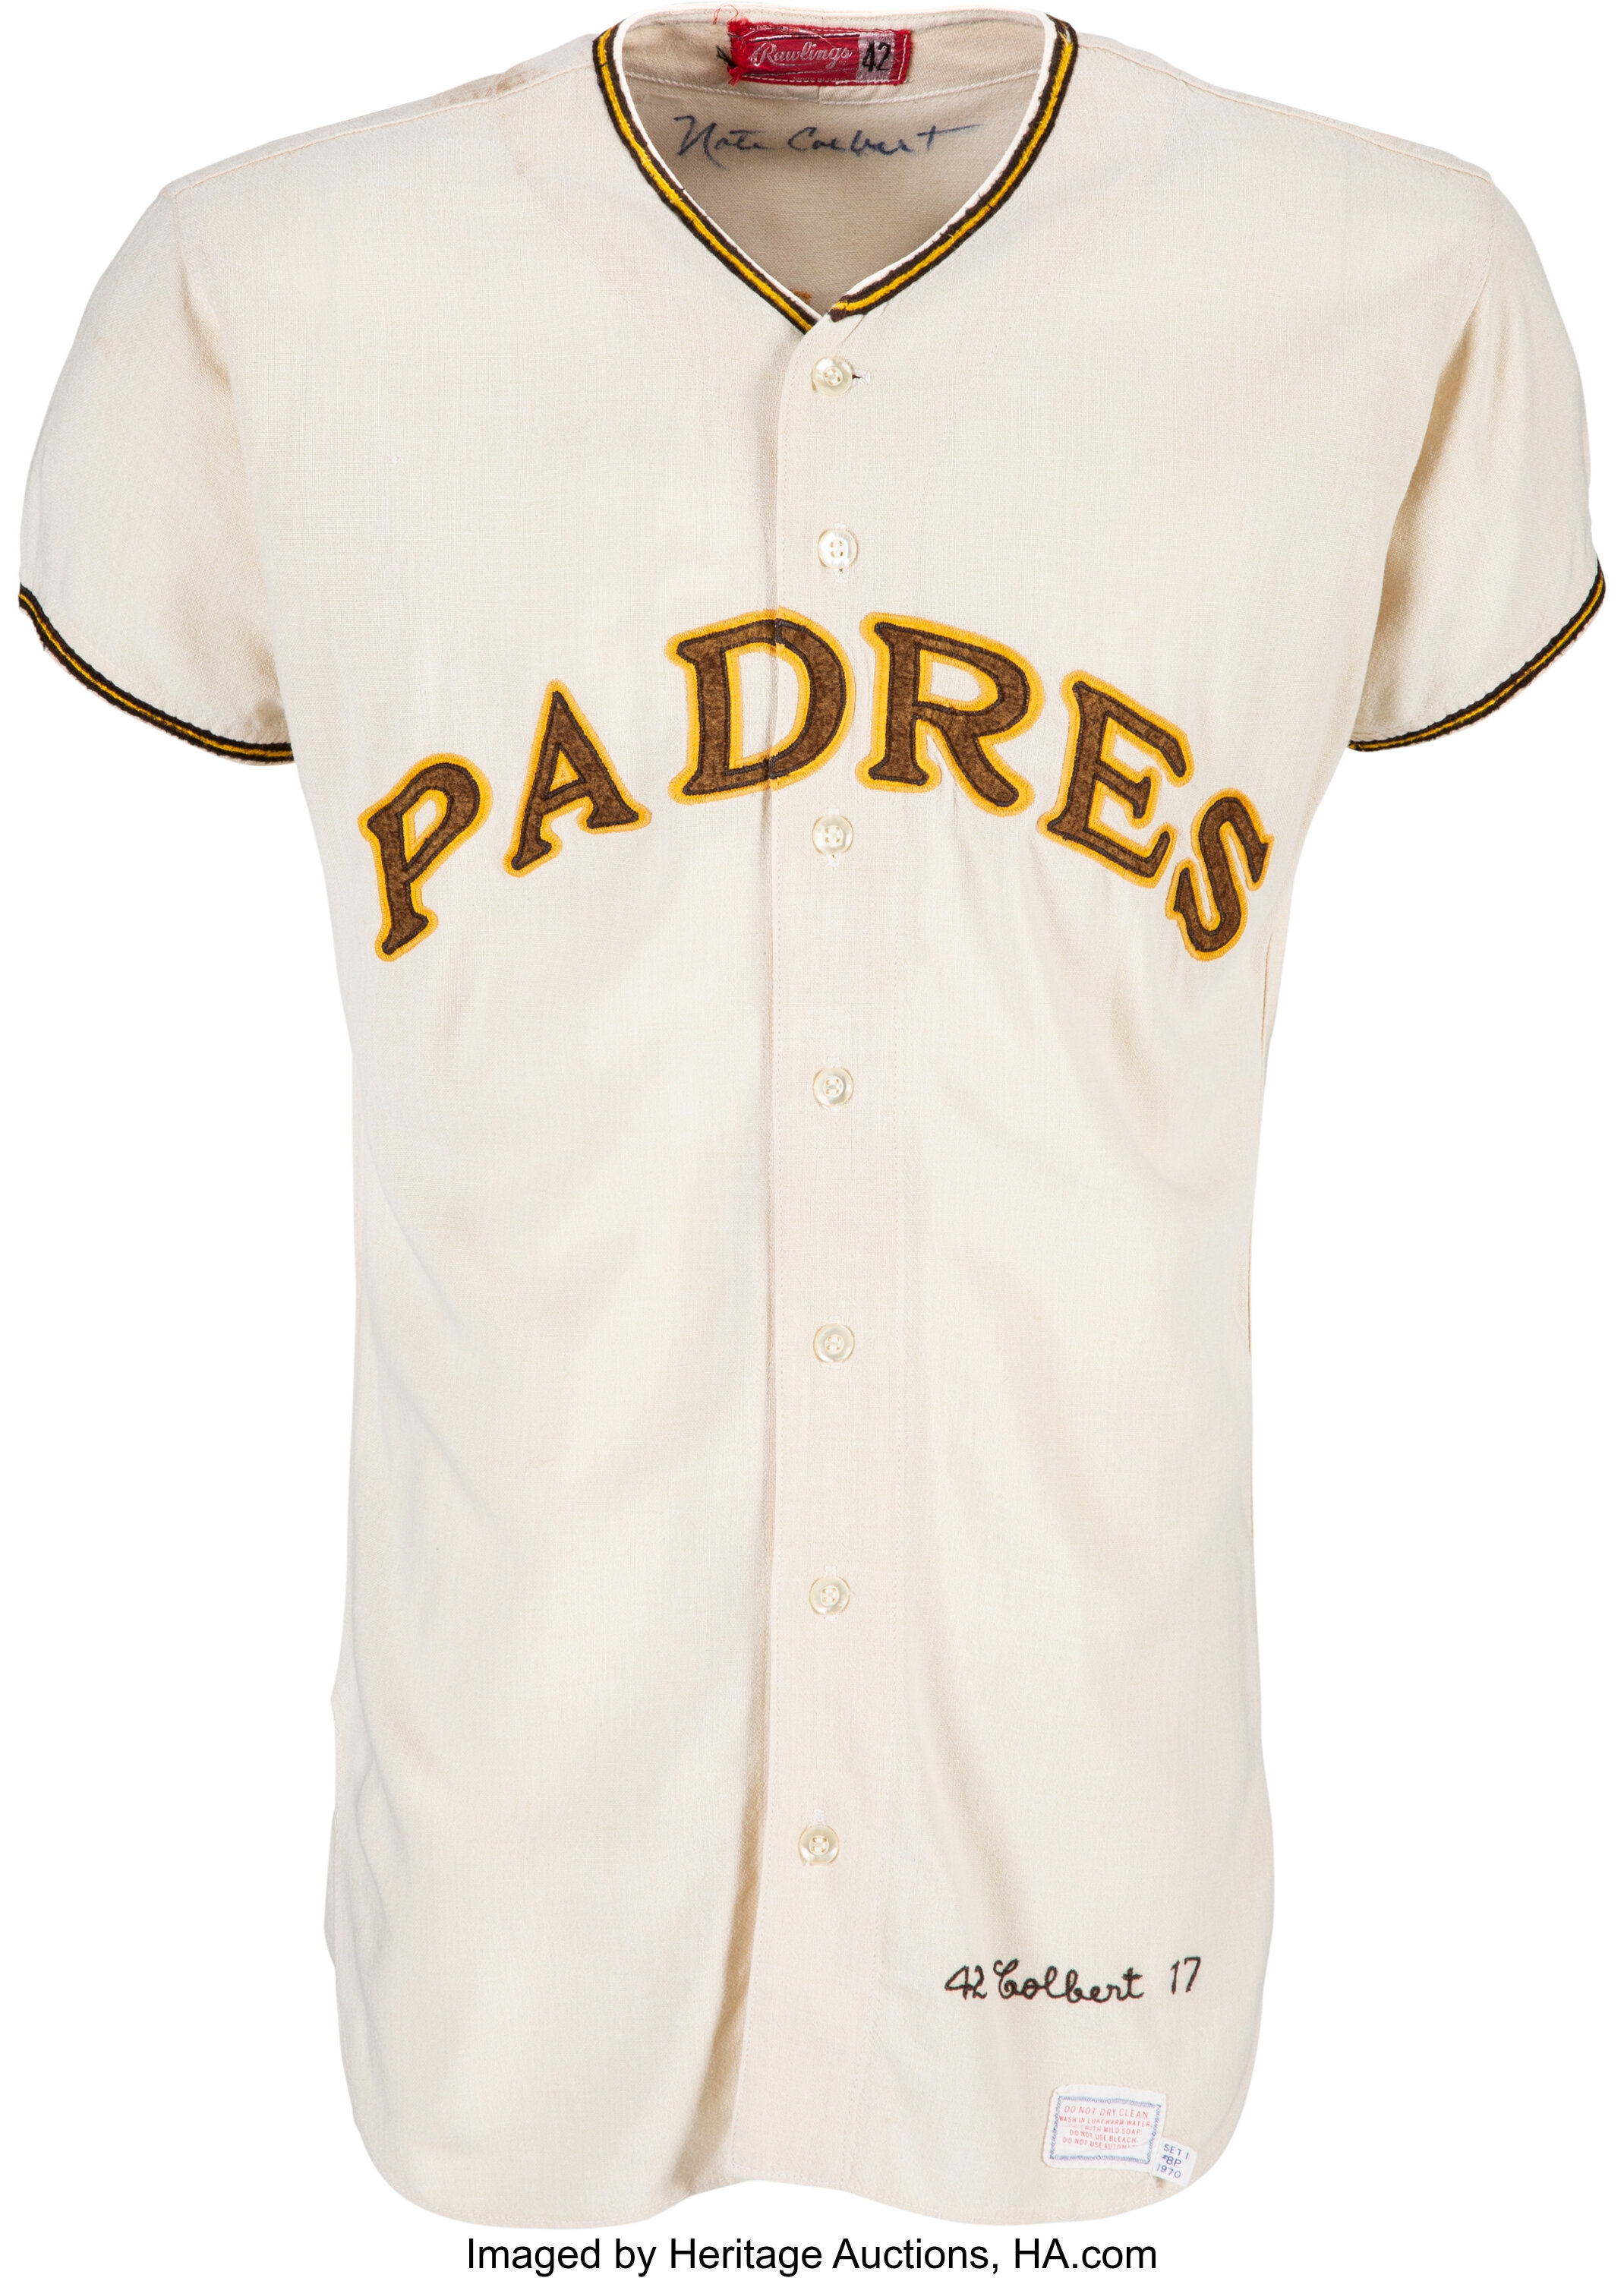 More modern mock-ups of Padres uniforms in retro colors - Gaslamp Ball